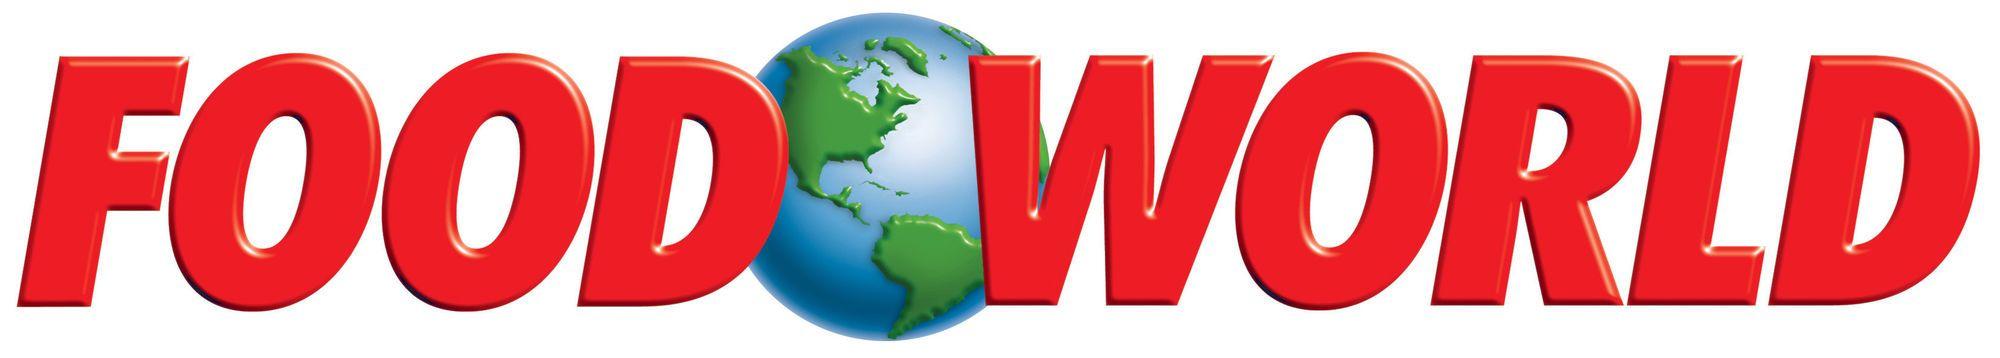 Food World Logo - Food World | Logopedia | FANDOM powered by Wikia